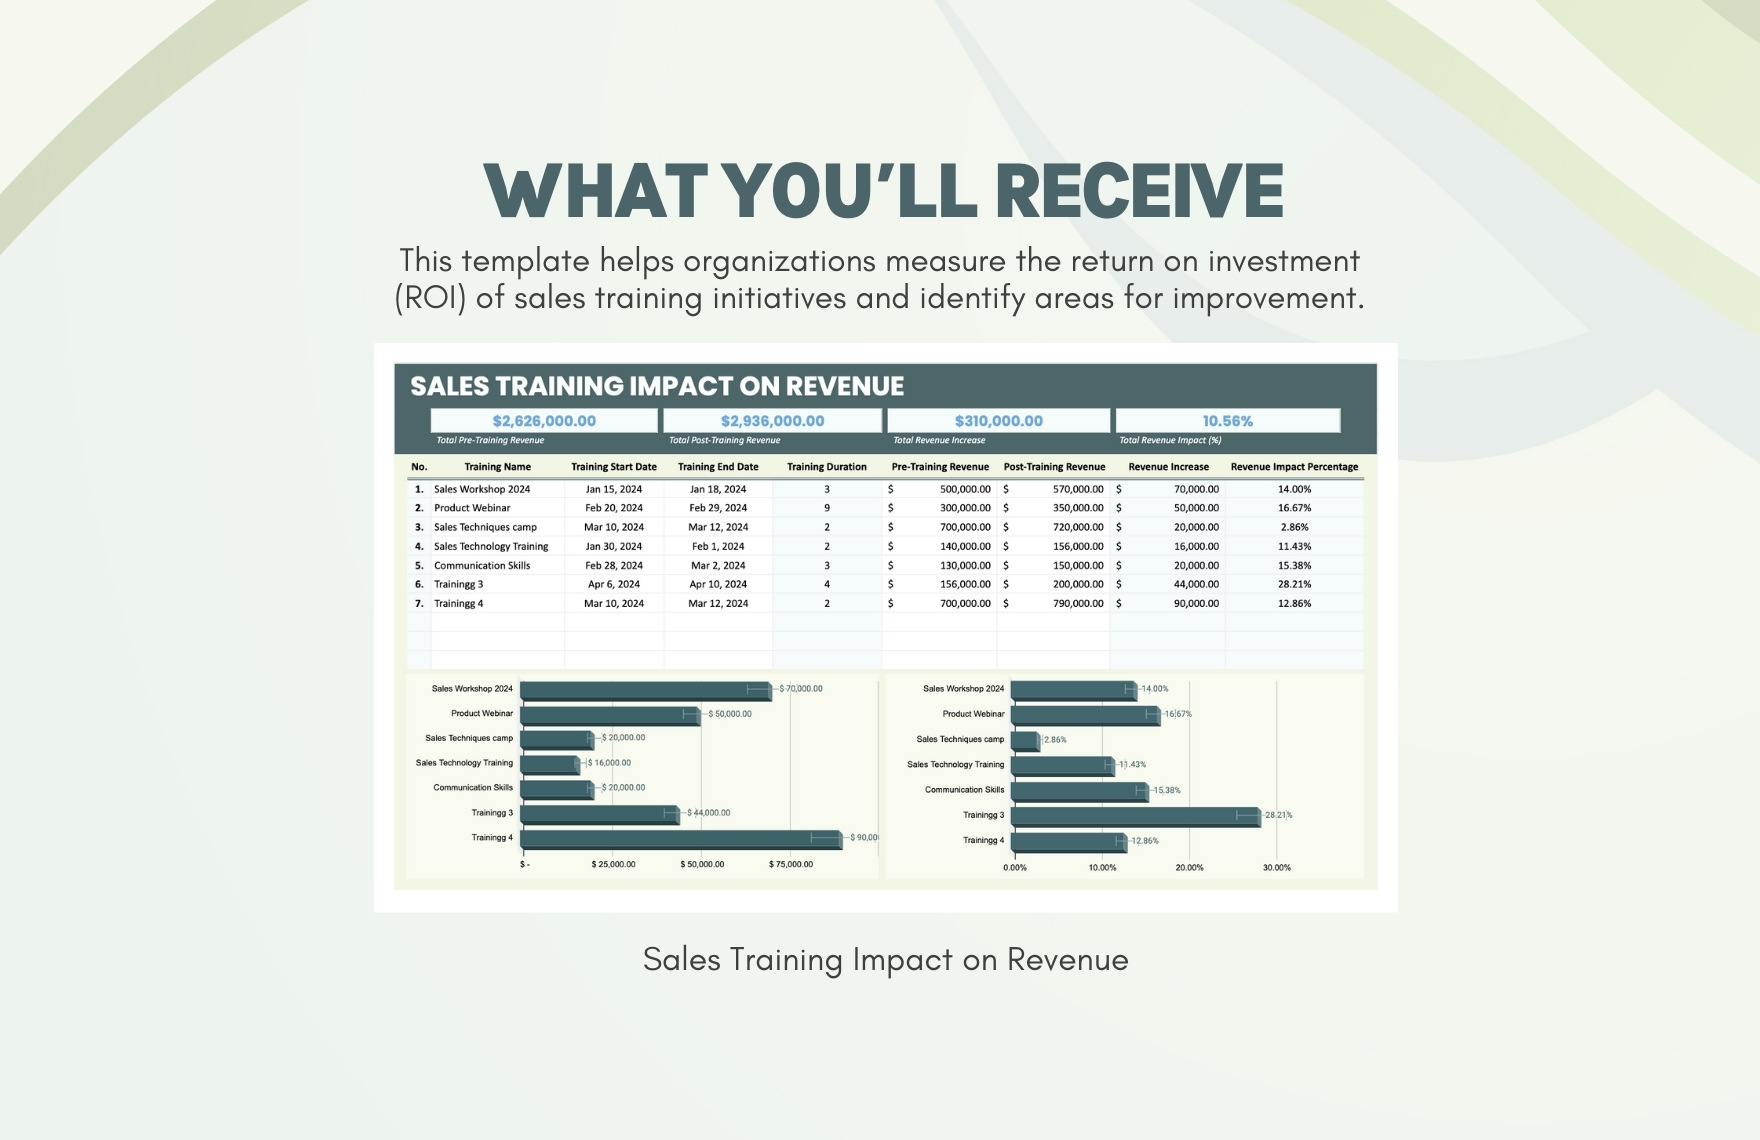 Sales Training Impact on Revenue Template